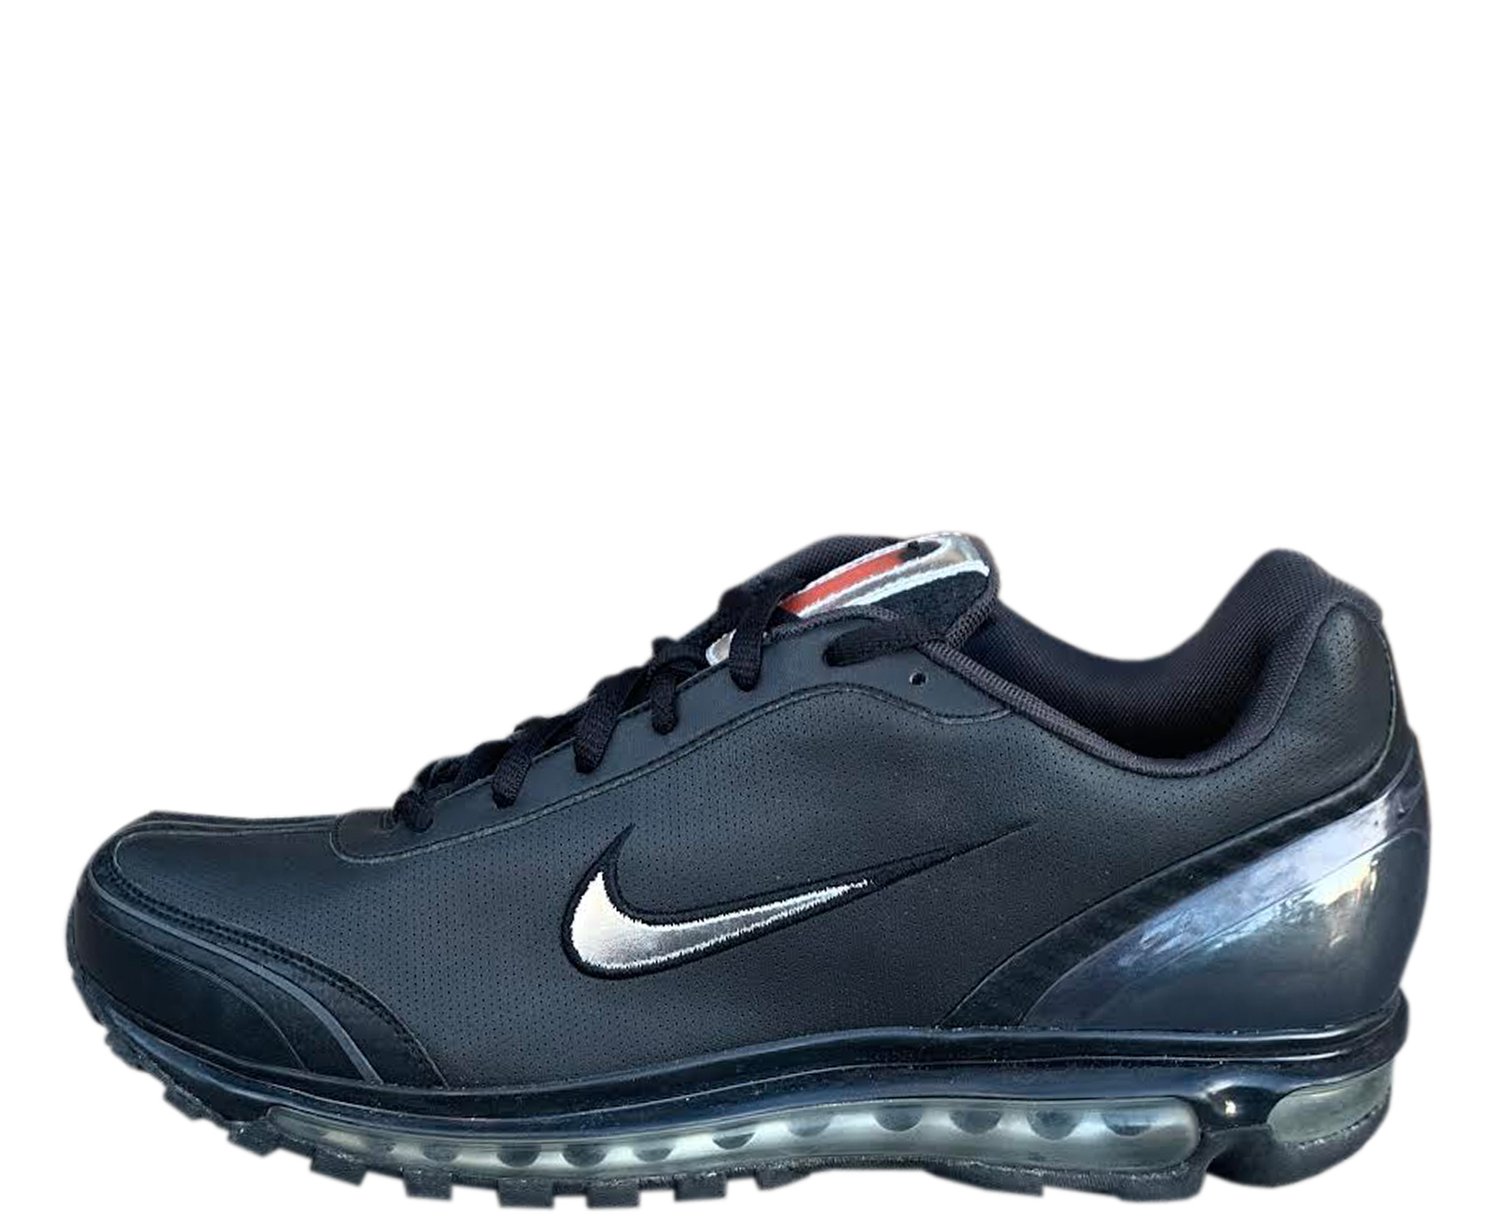 Nike Air Max 2004 Black / Red / Metallic Silver / Carbon Fiber (Size 9) "Sample Unreleased" —